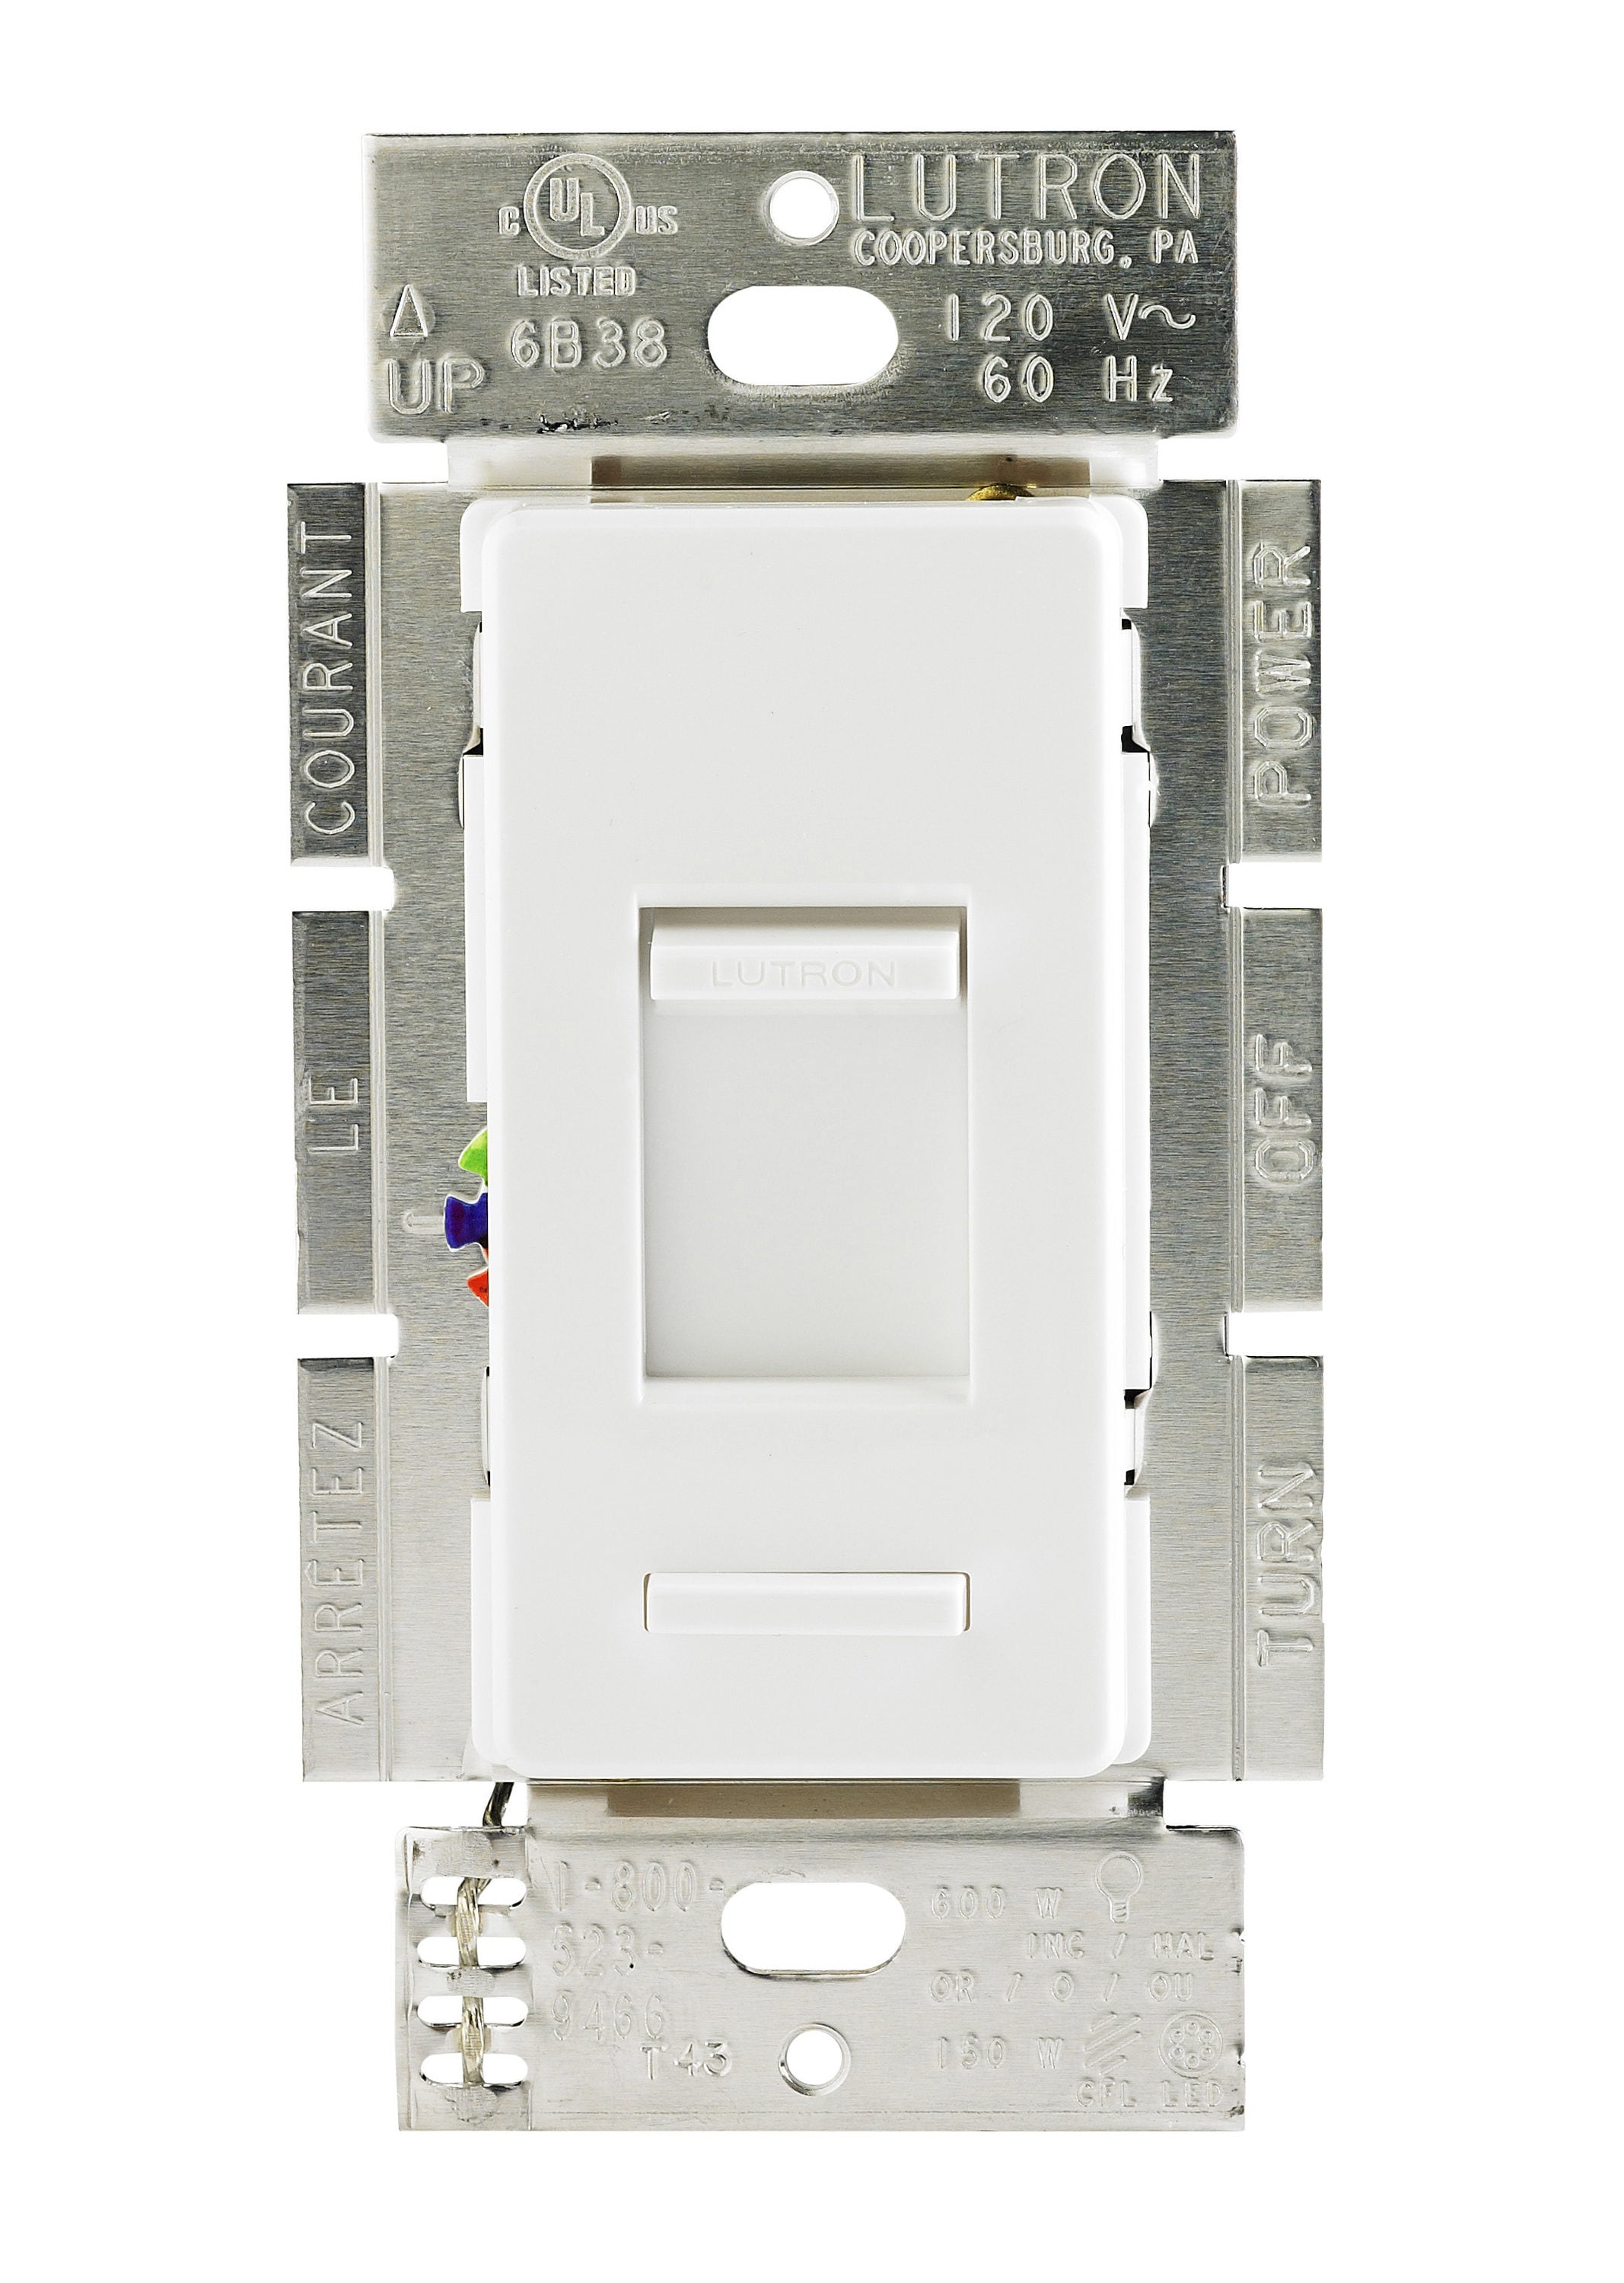 Lutron Lumea Single-pole LED Slide Light Dimmer Switch, White in